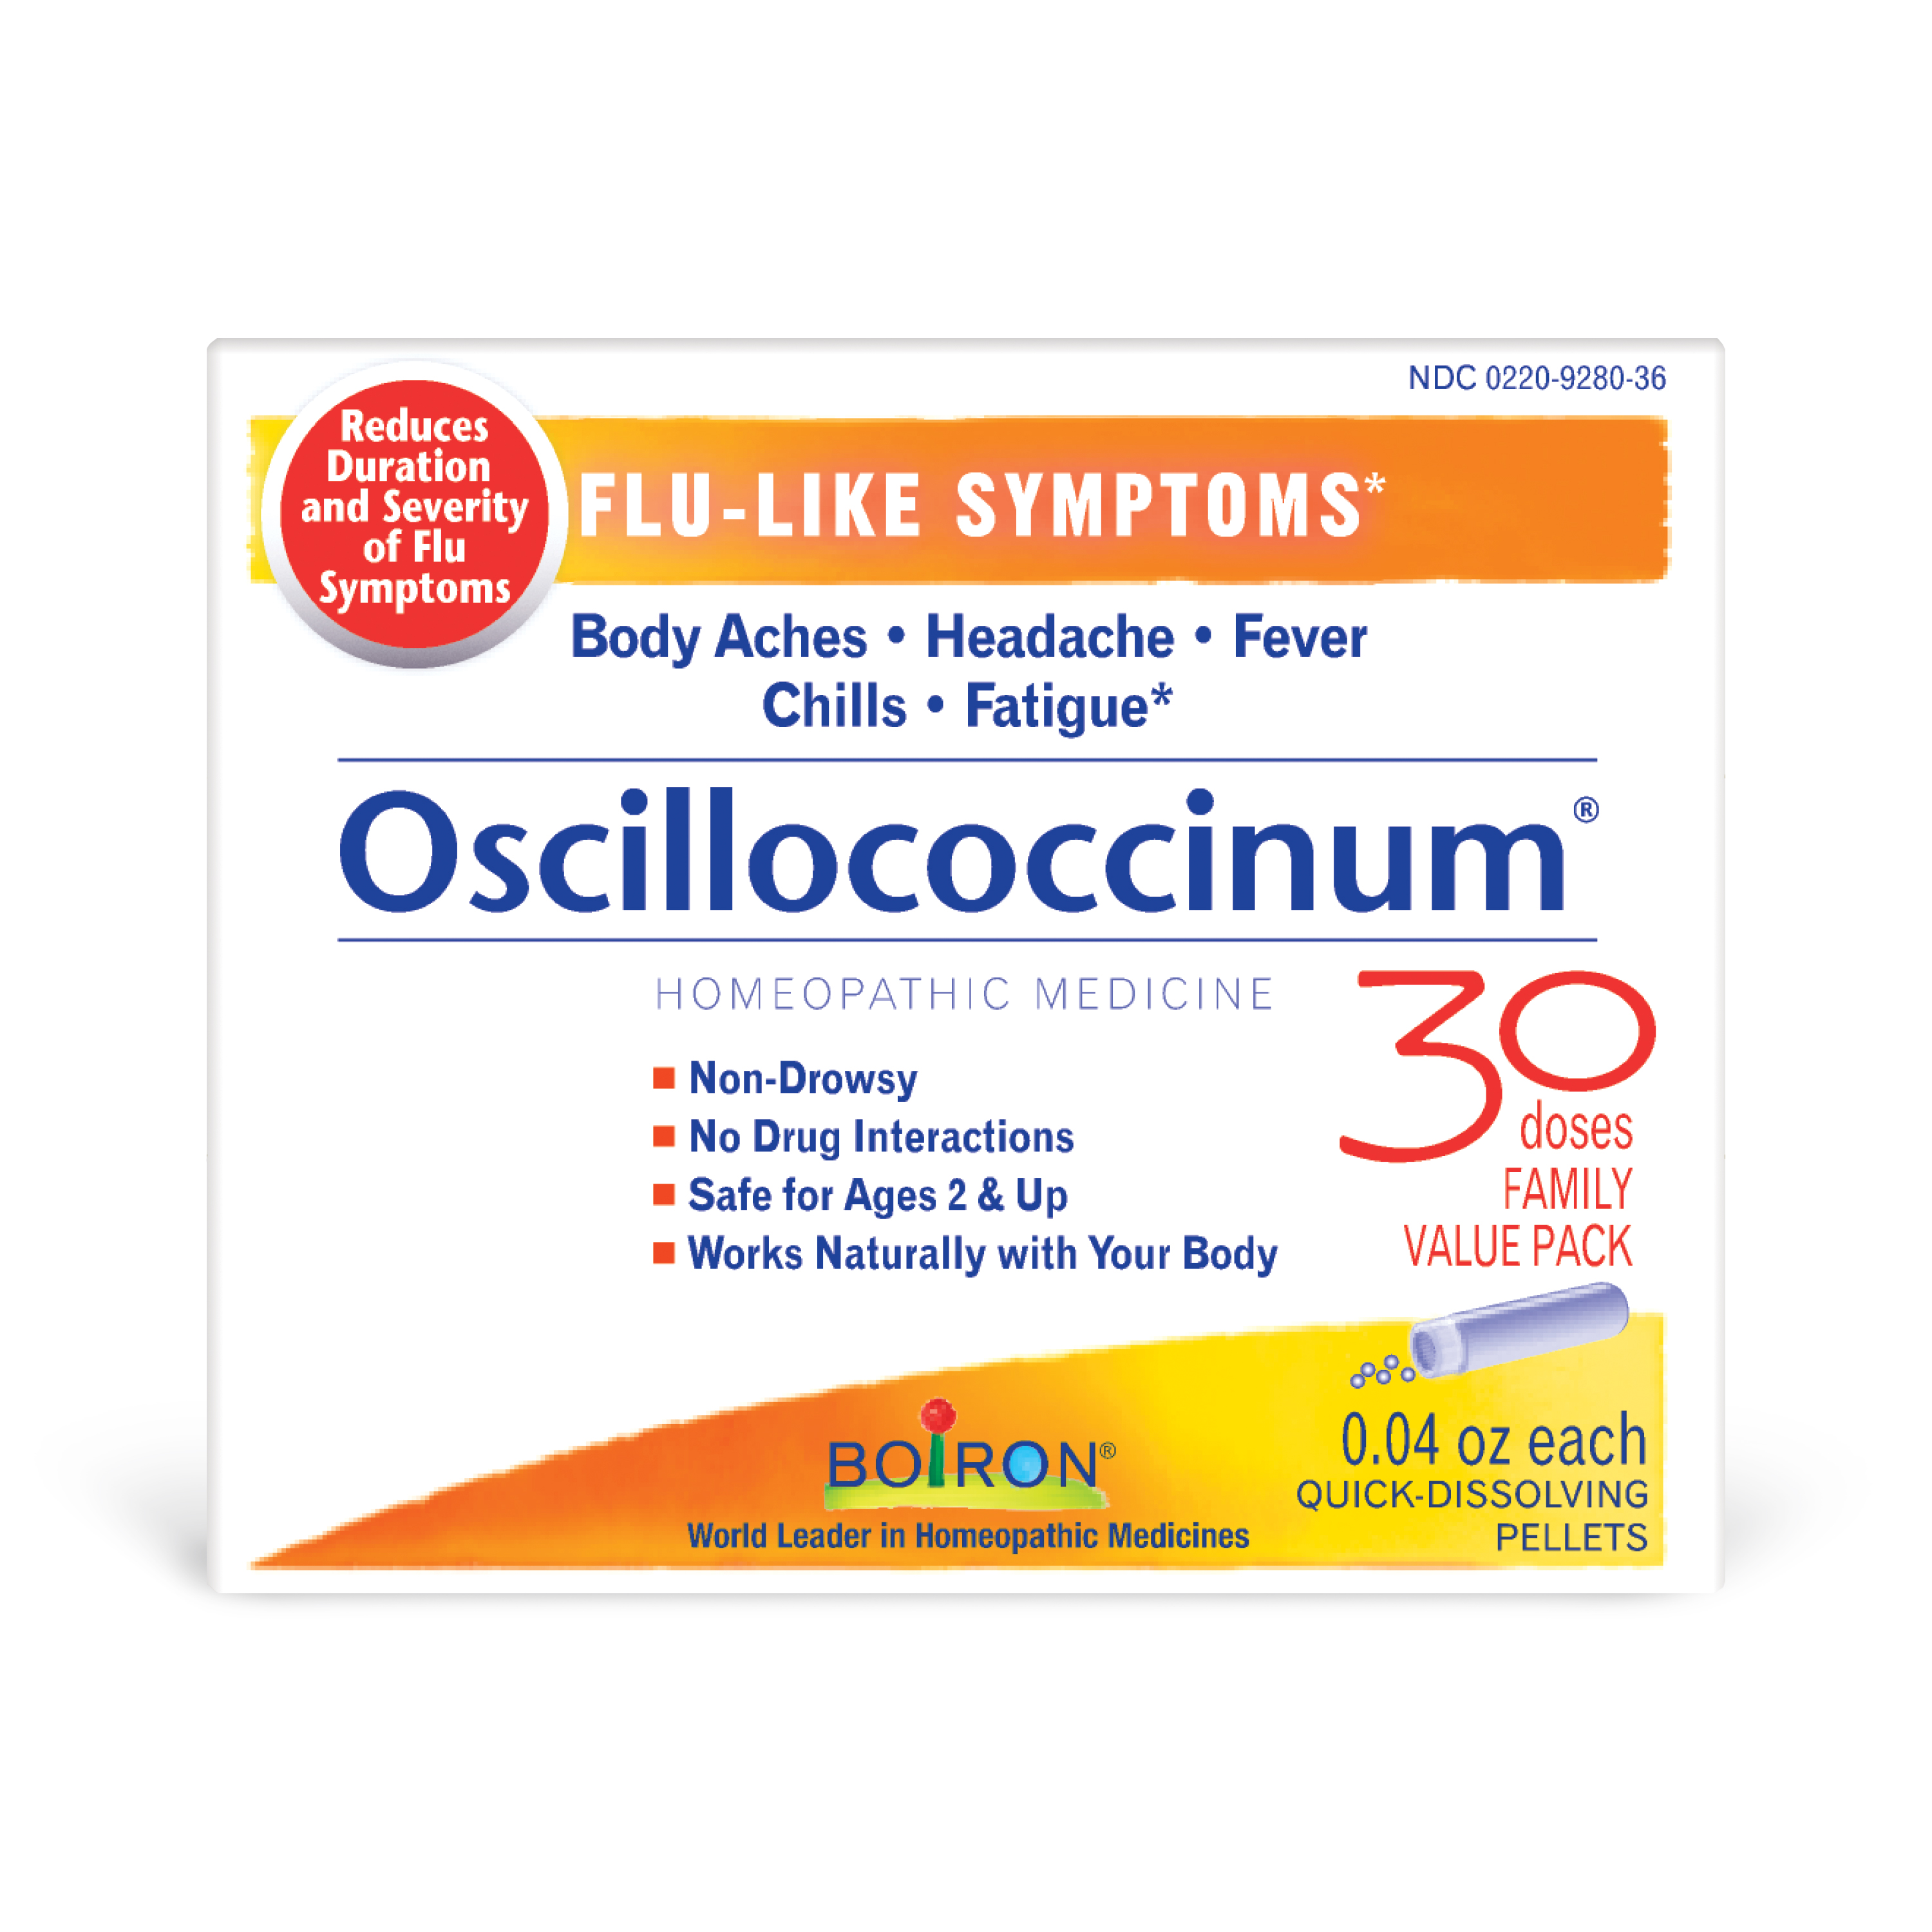 Image for Oscillococcinum